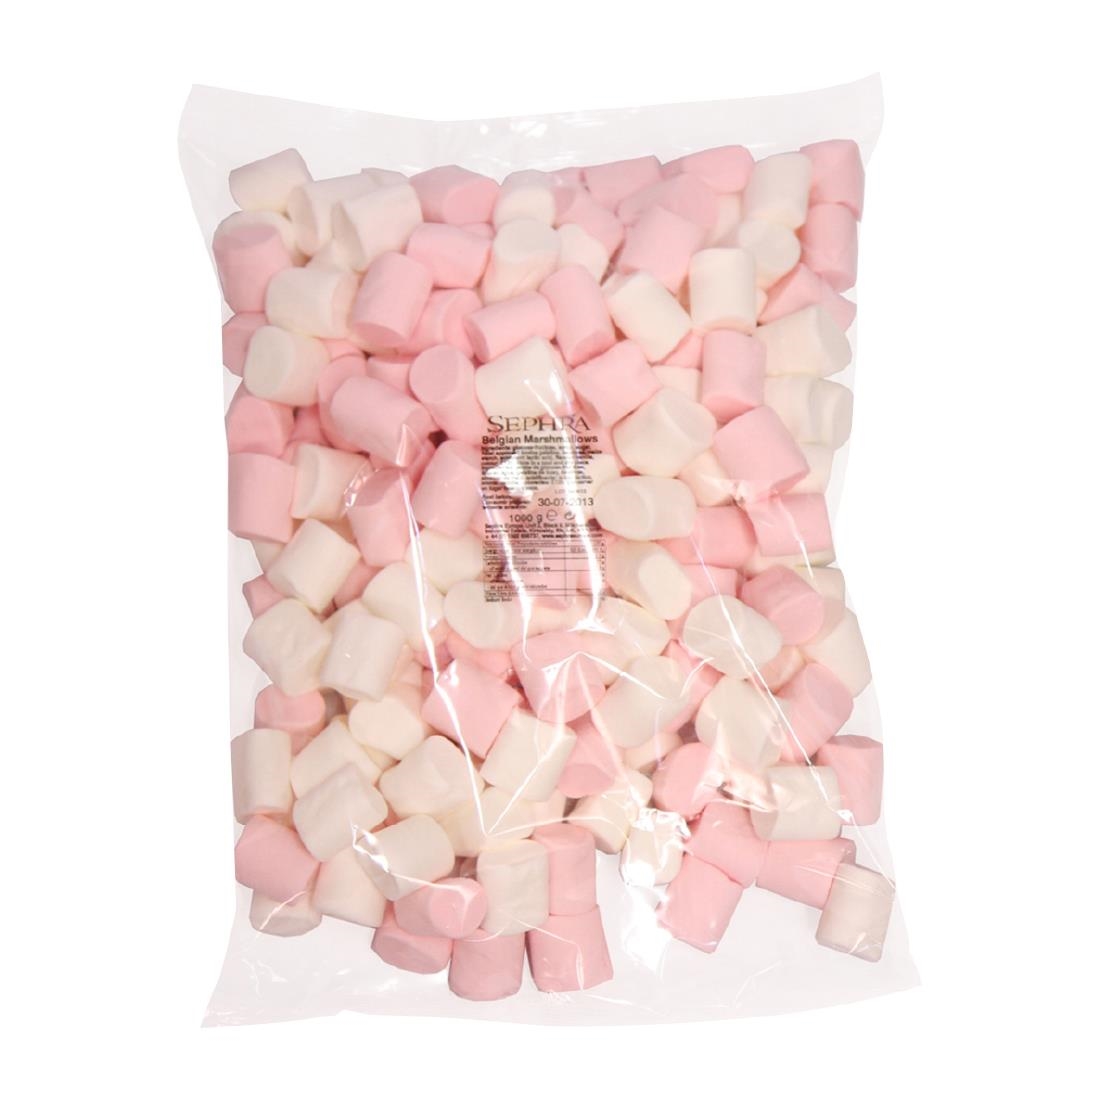 Sephra Pink and White Halal Mini Marshmallows 1kg (HU135)